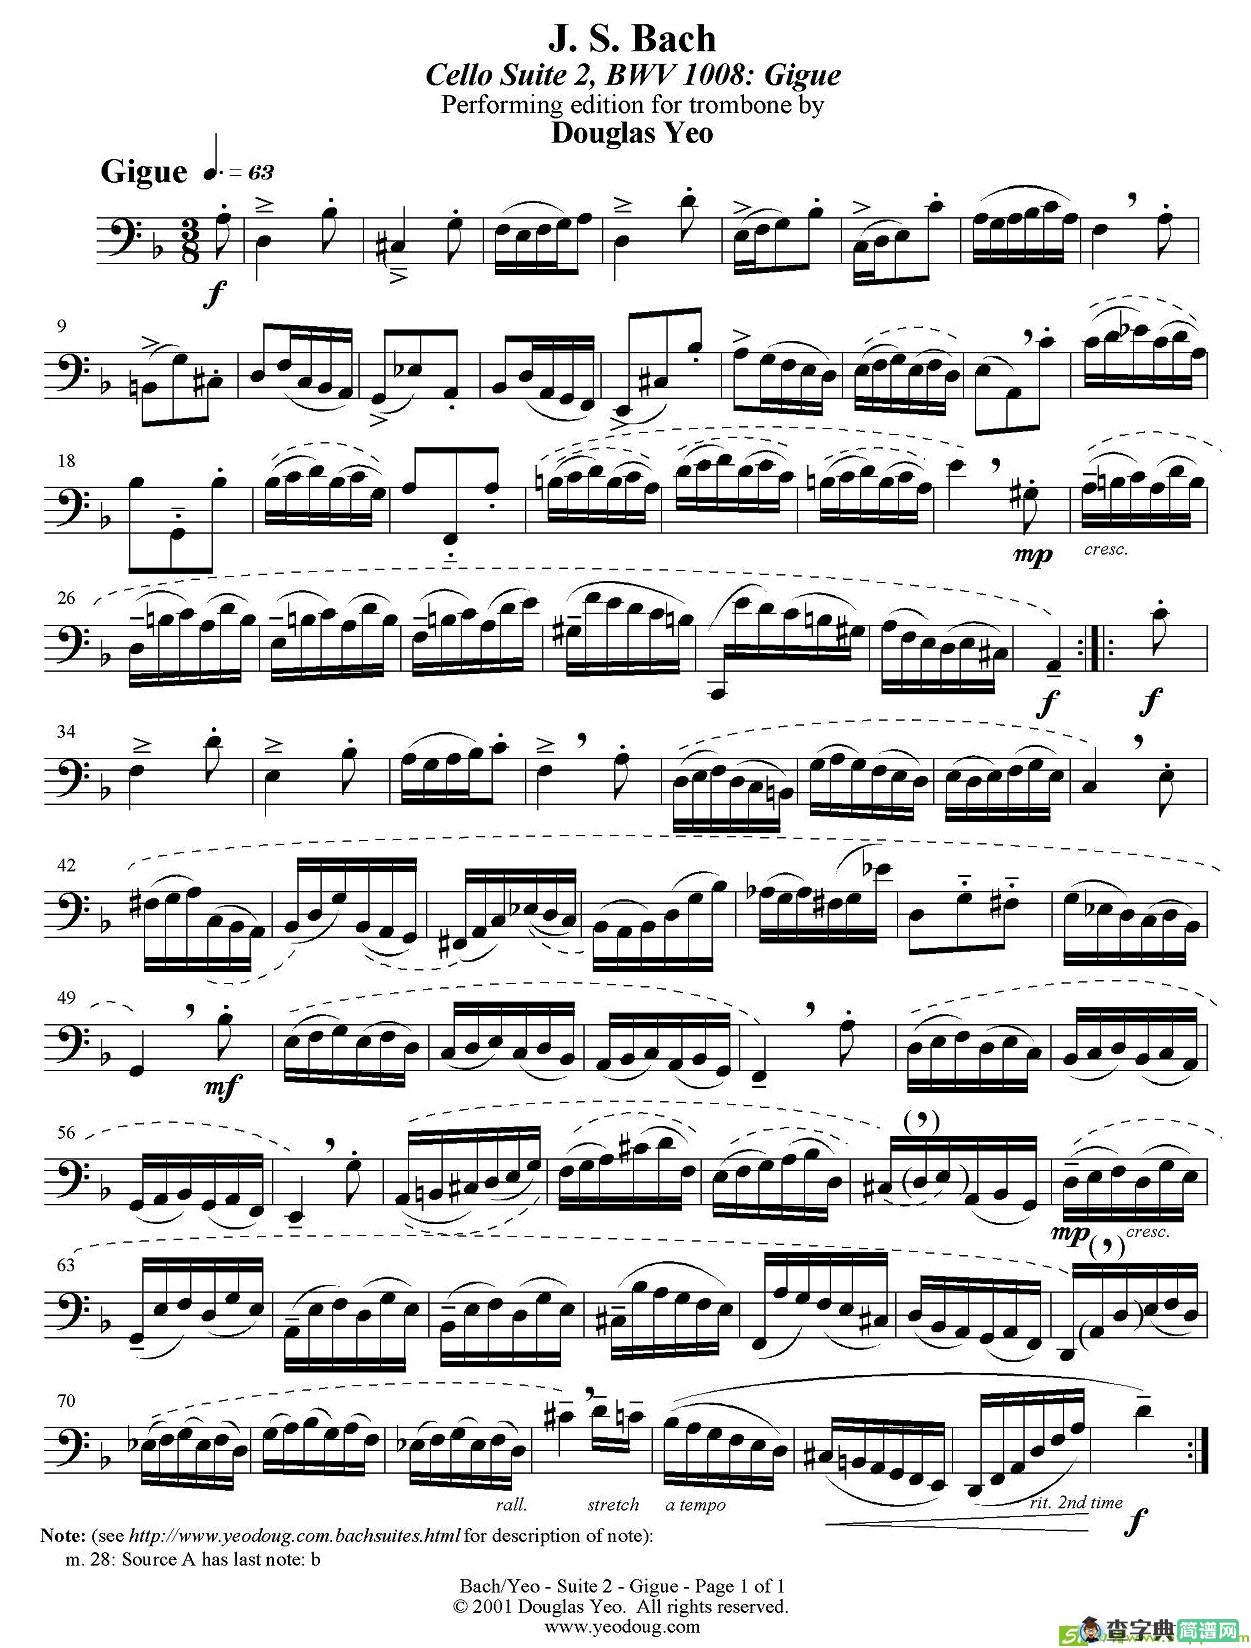 Douglas Yeo - Gigue铜管谱(J·S·巴赫作曲)